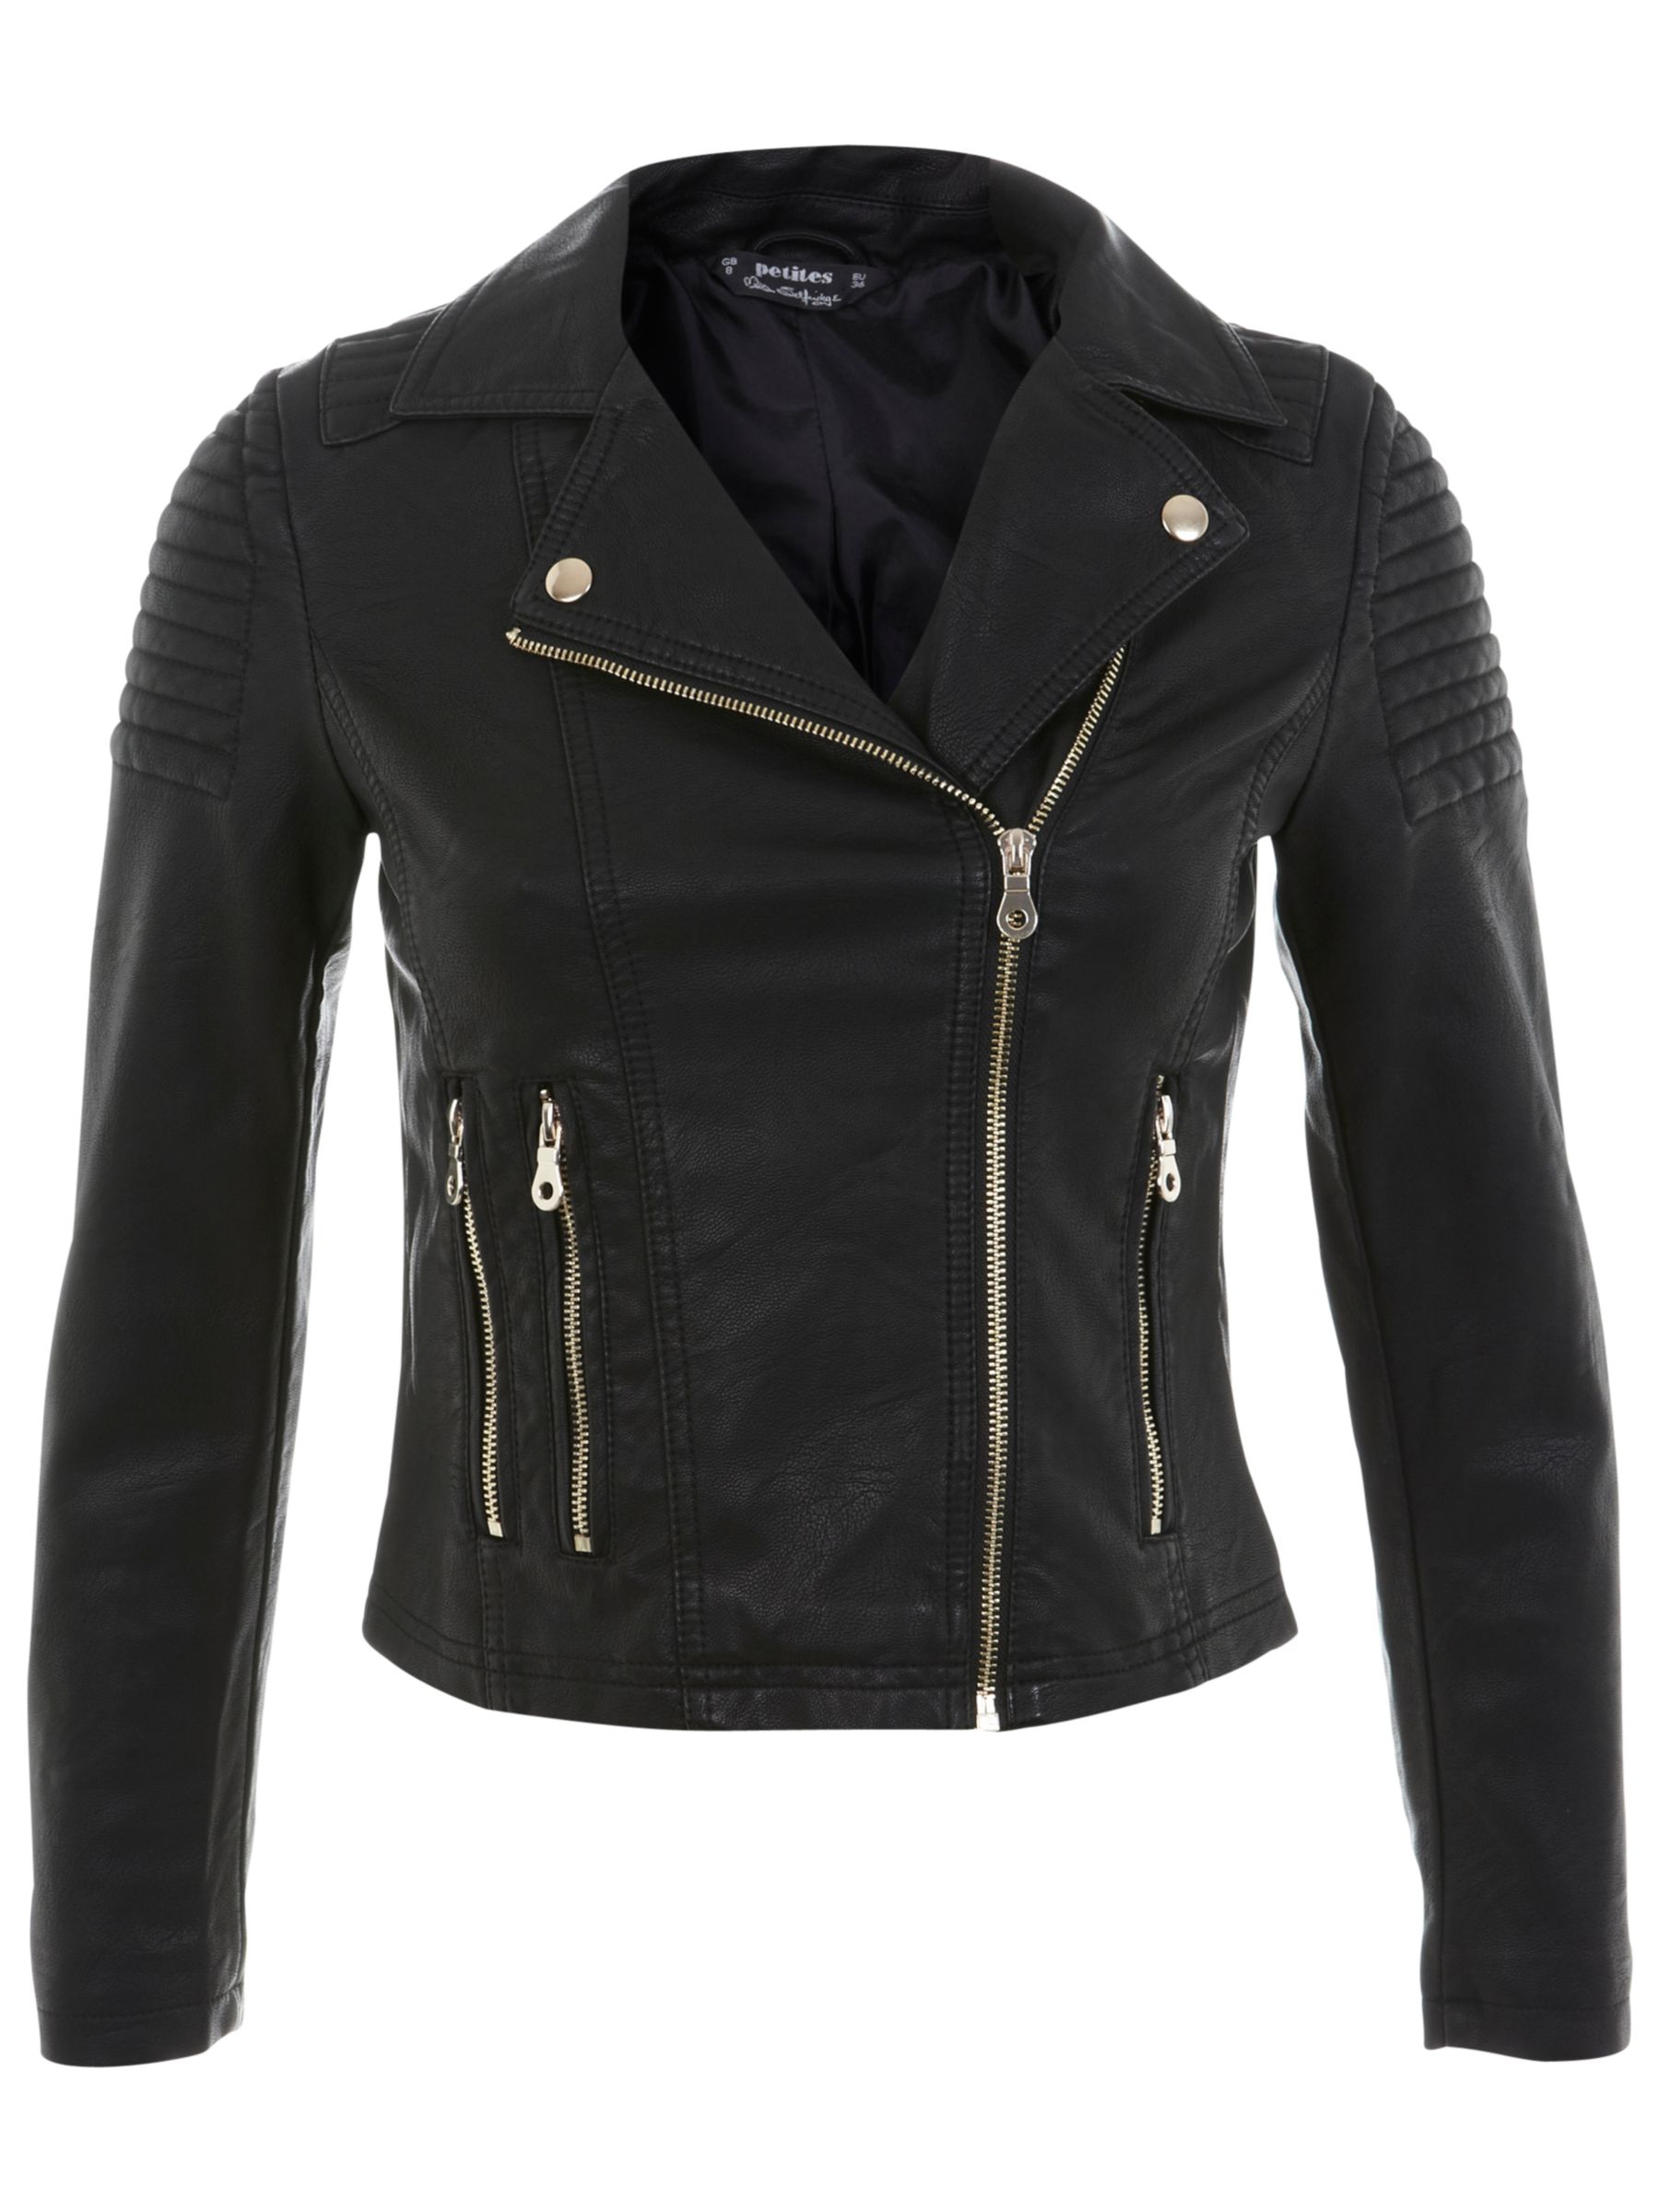 Miss Selfridge Petite Faux Leather Jacket, Black